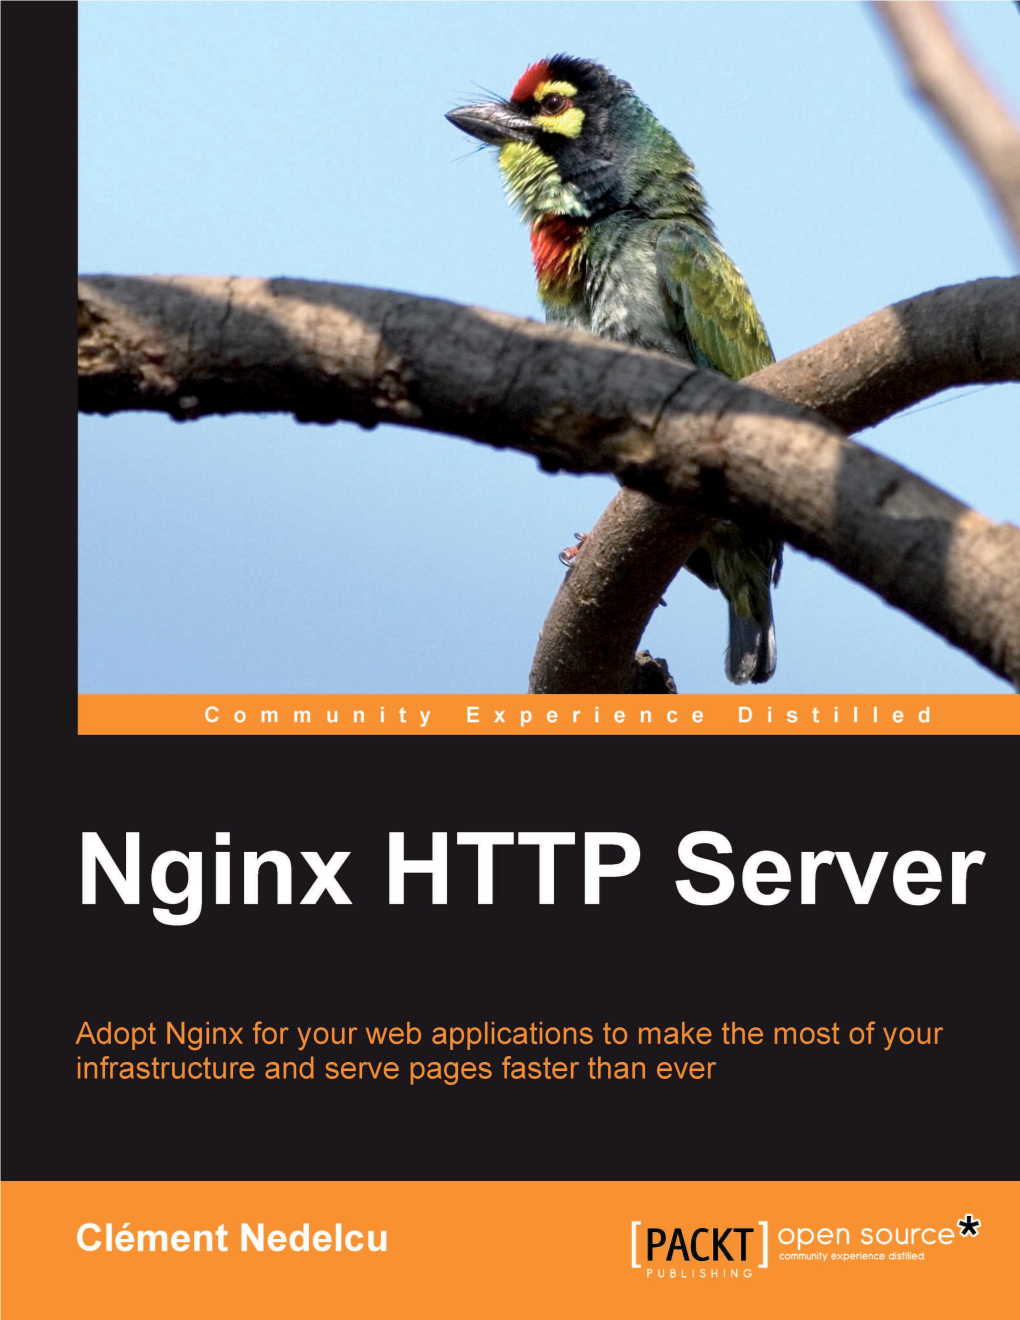 Configuring Nginx